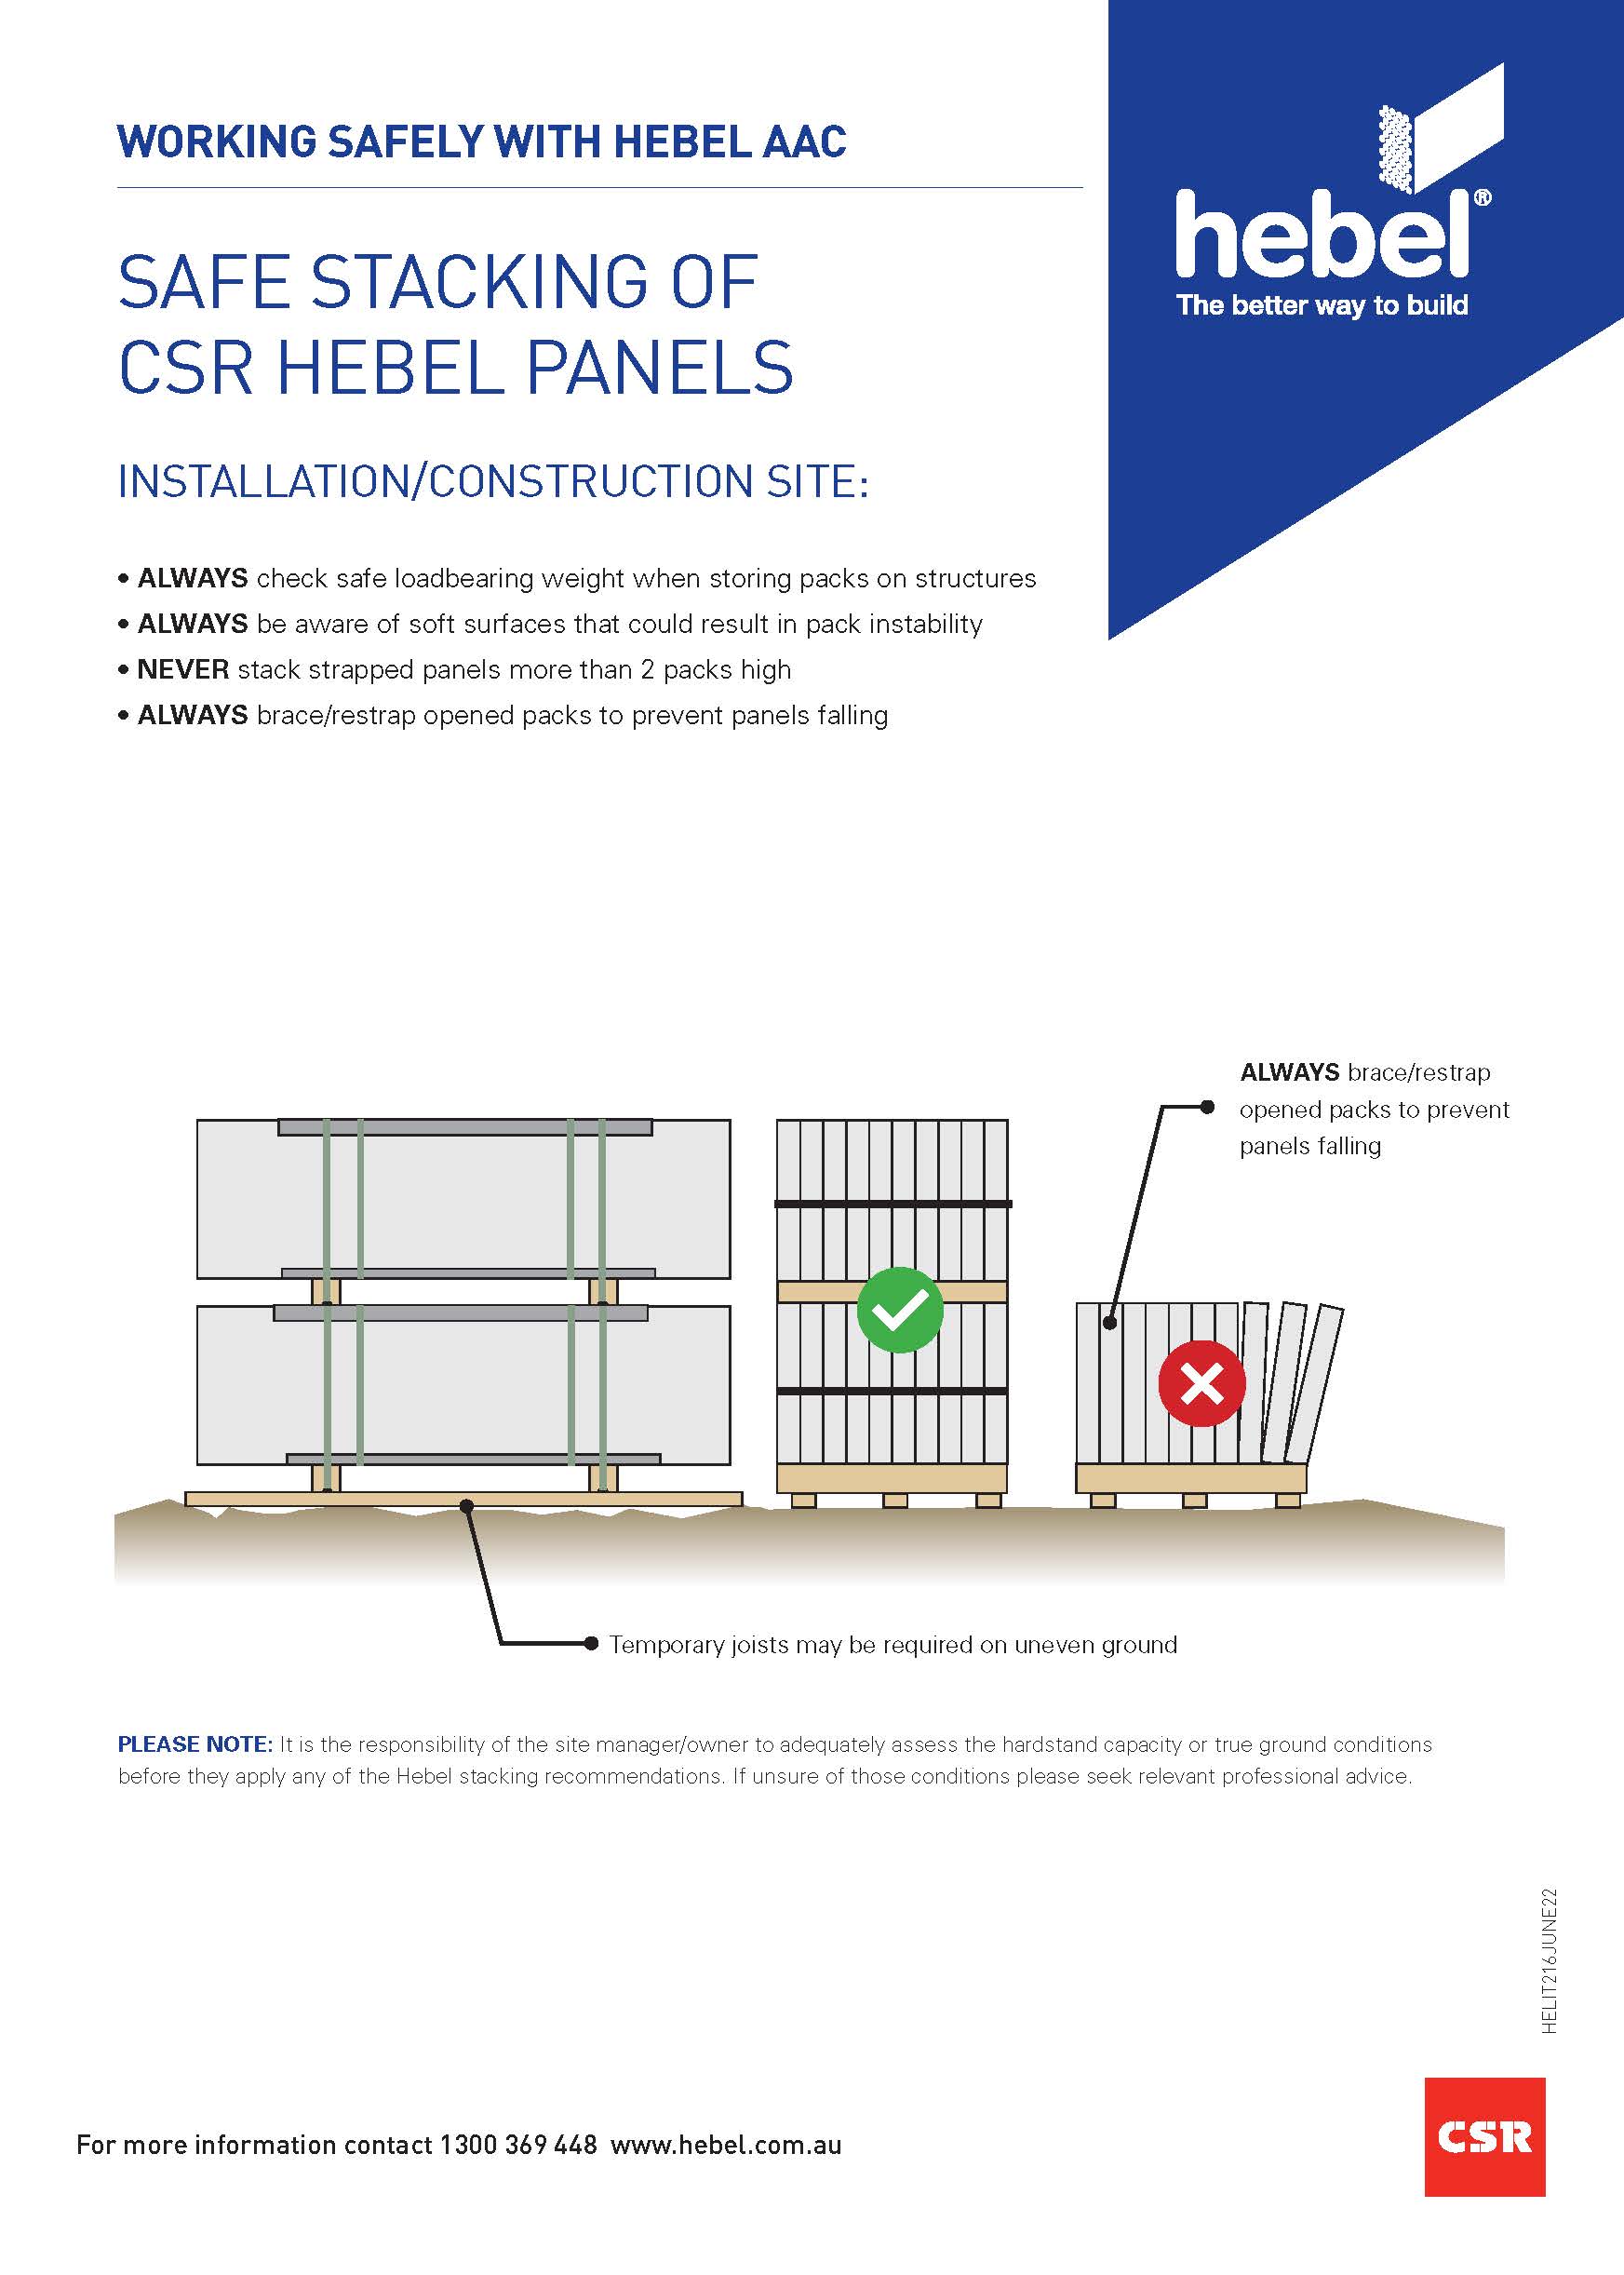 Hebel Safety Guide - Safe stacking of Hebel Panel